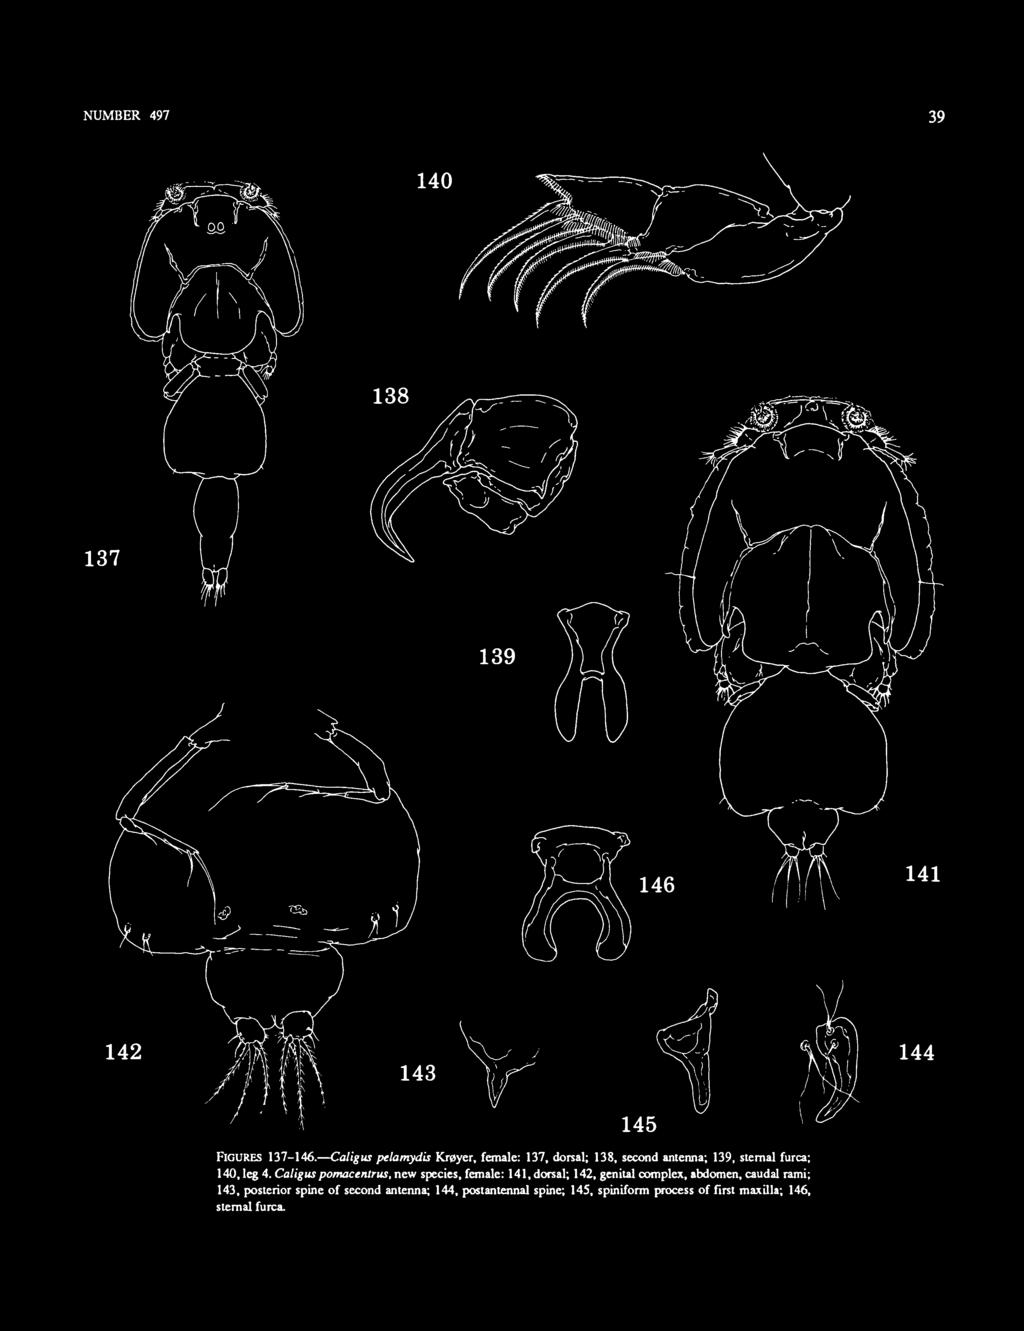 Caligus pomacenlr us, new species, female: 141, dorsal; 142, genital complex, abdomen, caudal